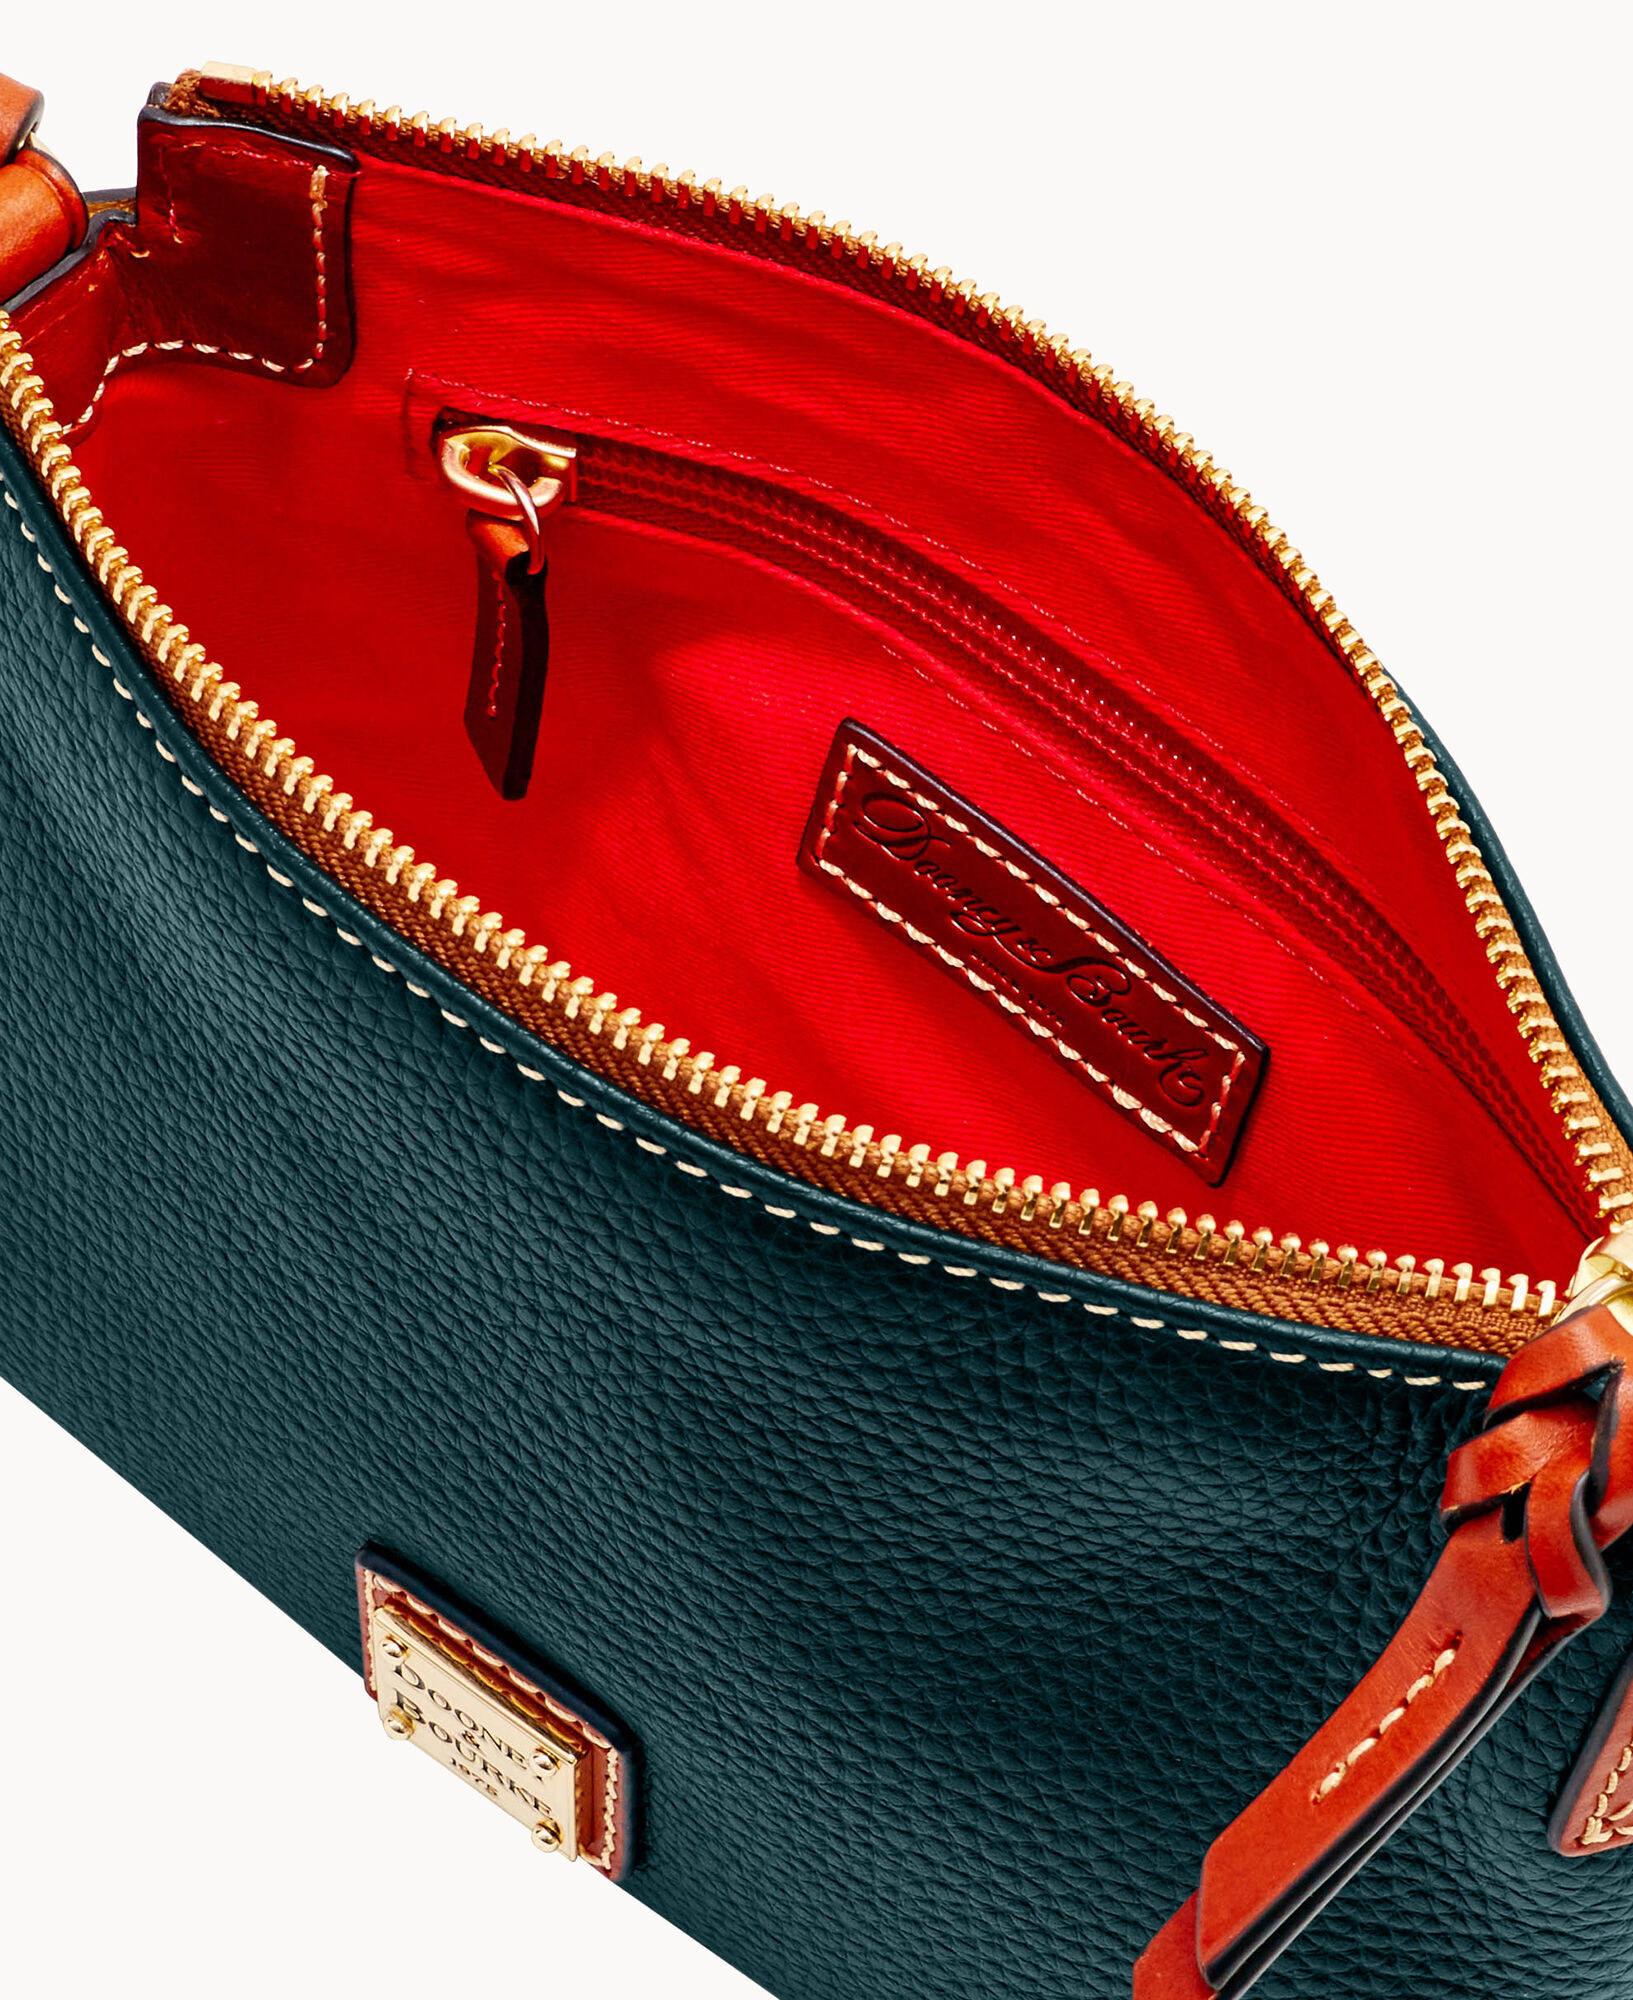 Dooney & Bourke - Pebble Leather Camera Crossbody Bag Purse Green